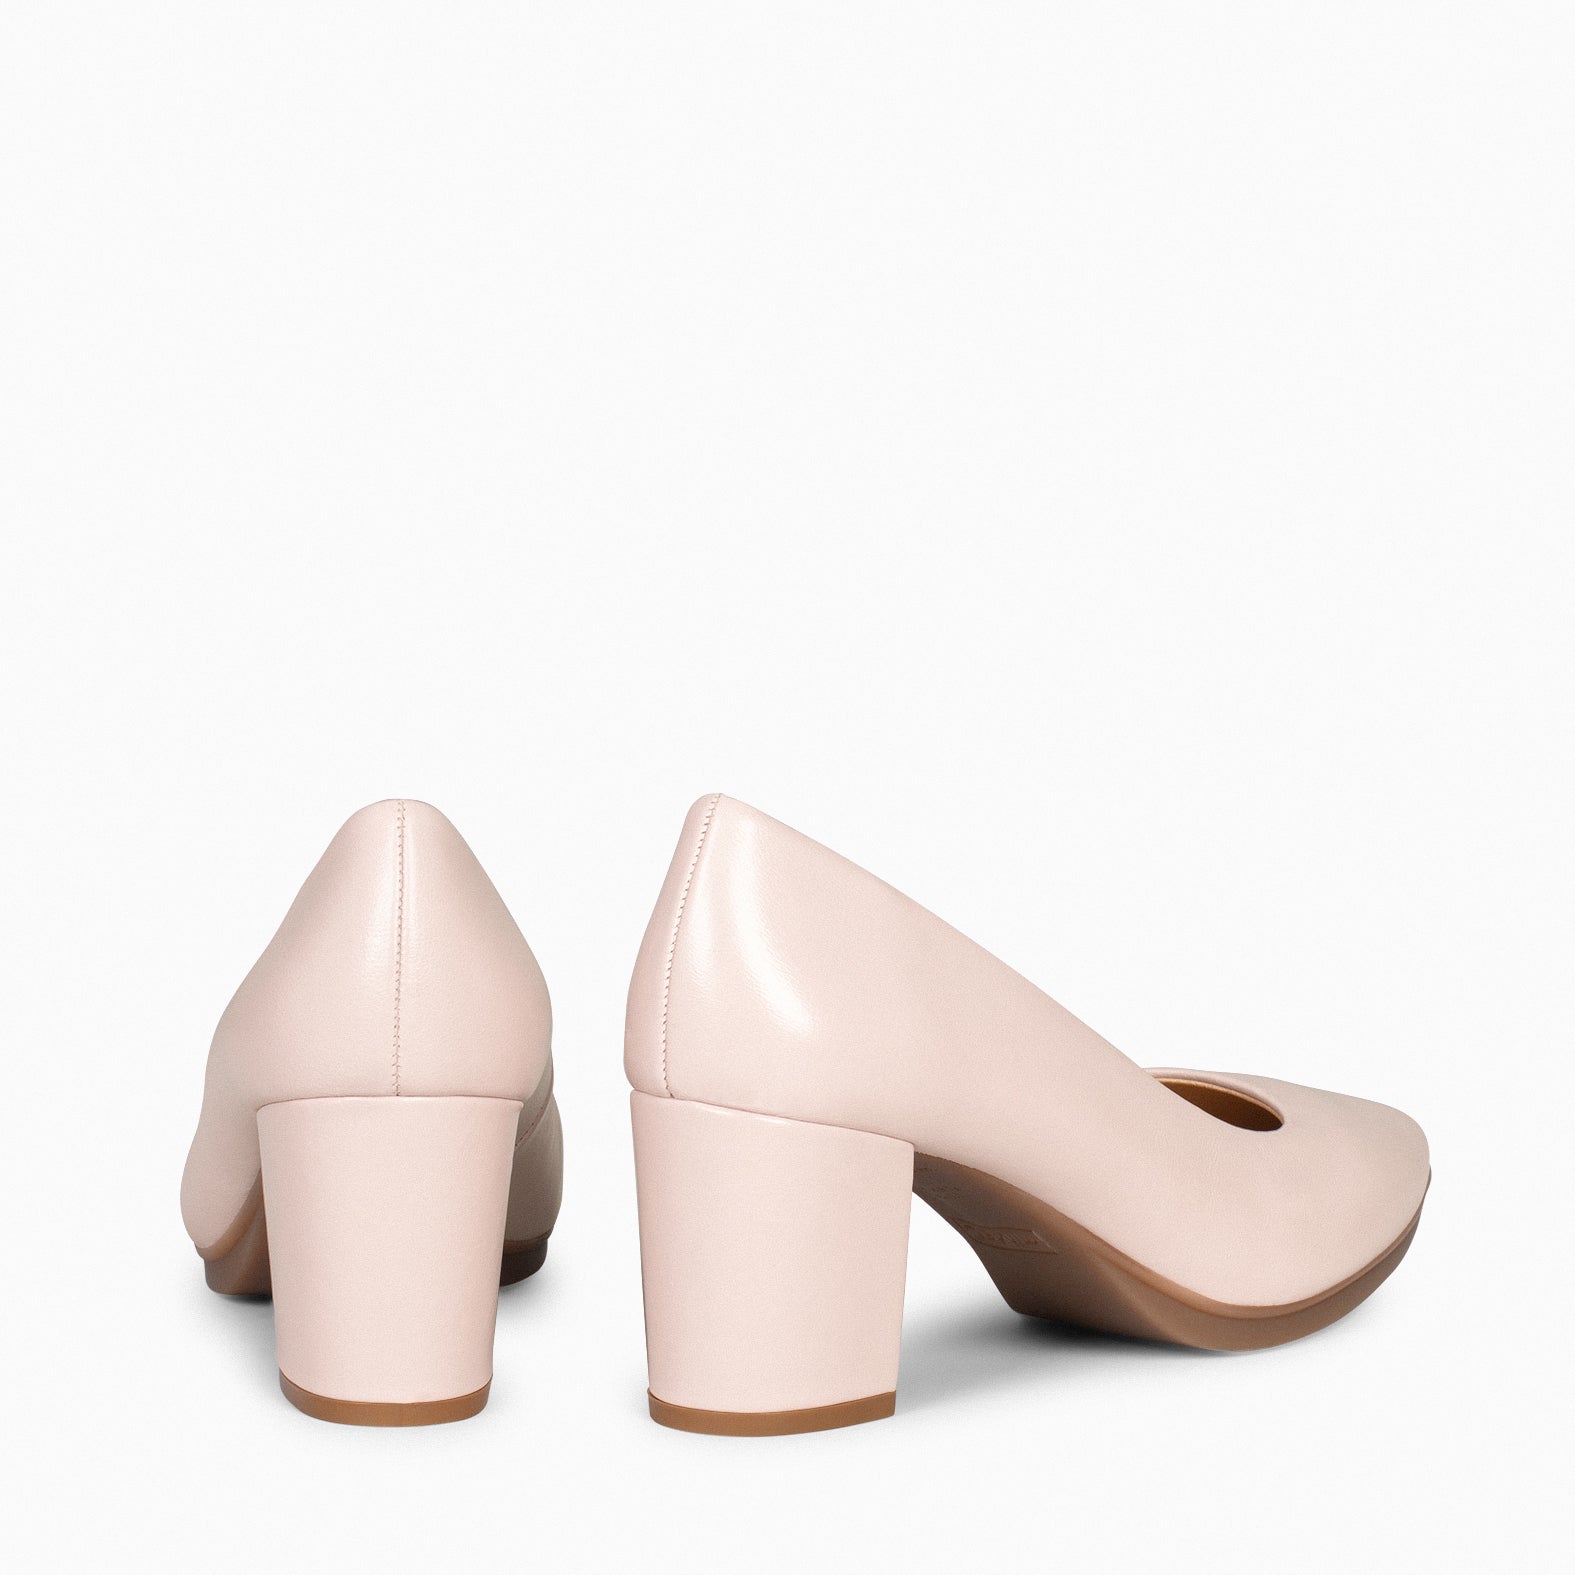 URBAN S SALON – NUDE nappa leather mid heel